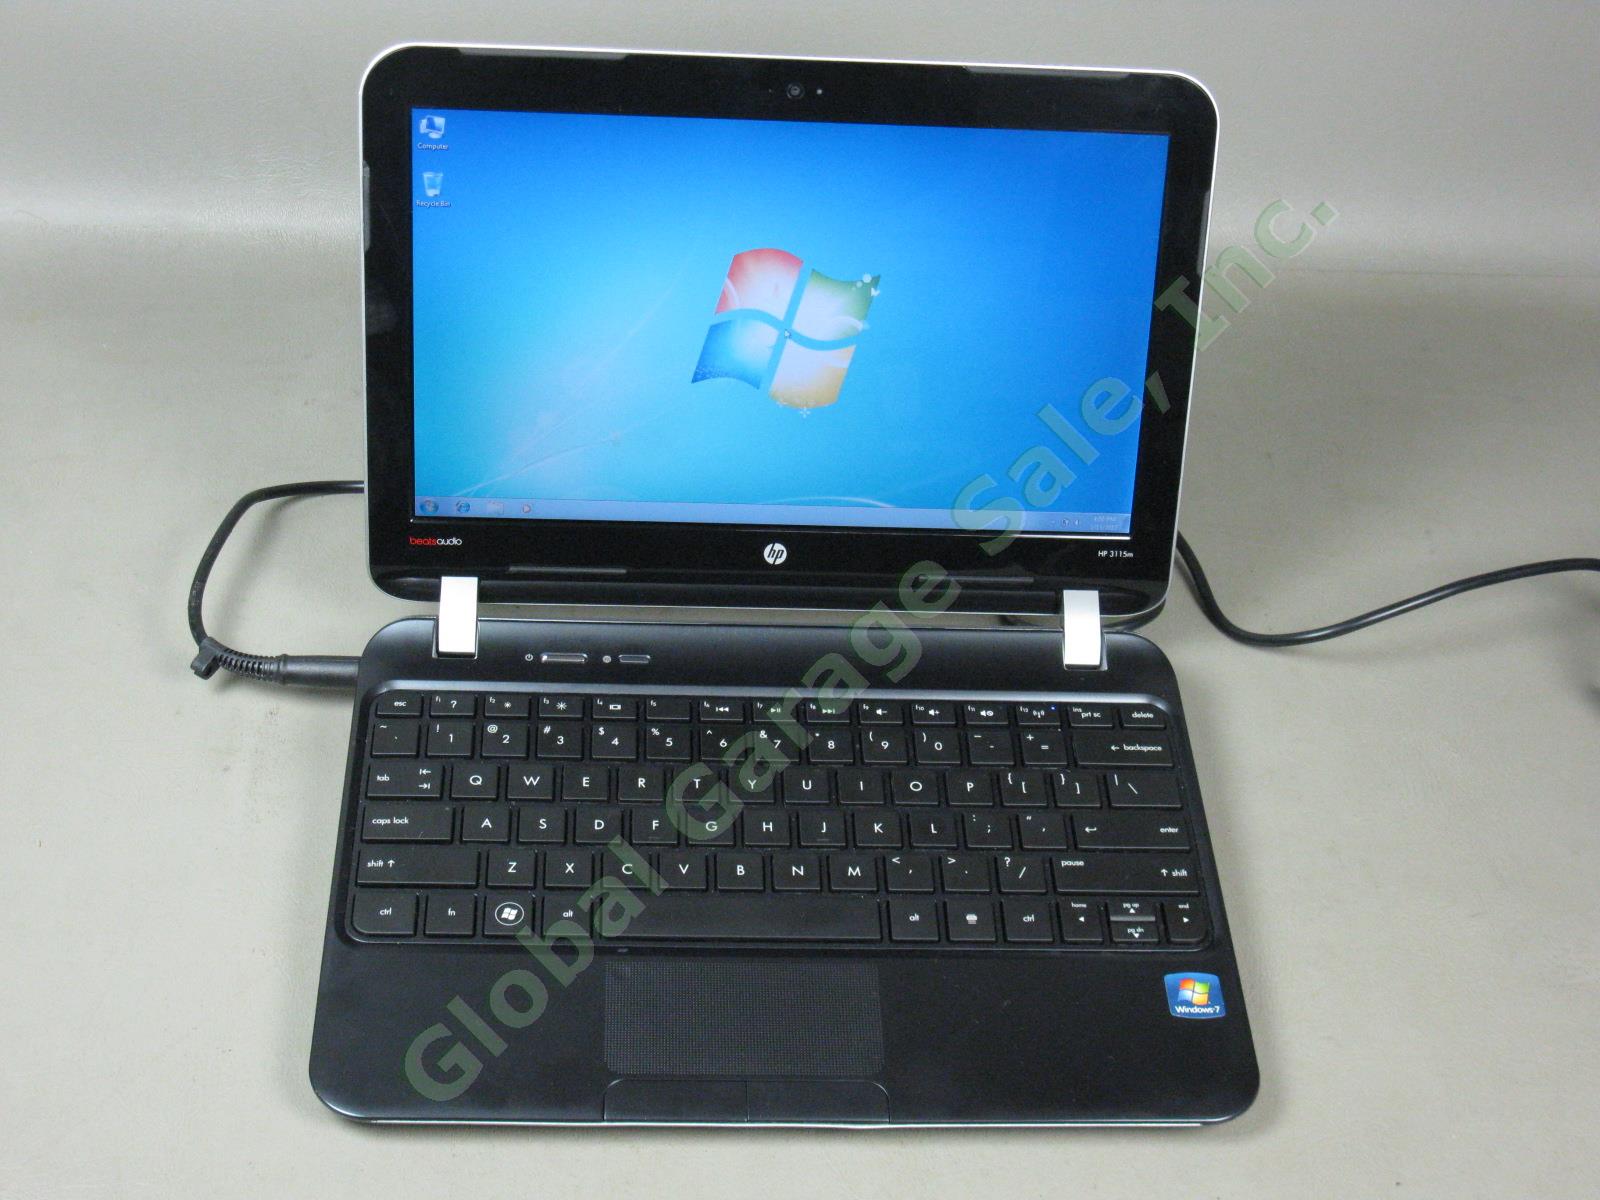 HP 3115m Notebook Laptop AMD E-450 1.65GHz 4GB RAM 320GB Windows 7 Ultimate NR!